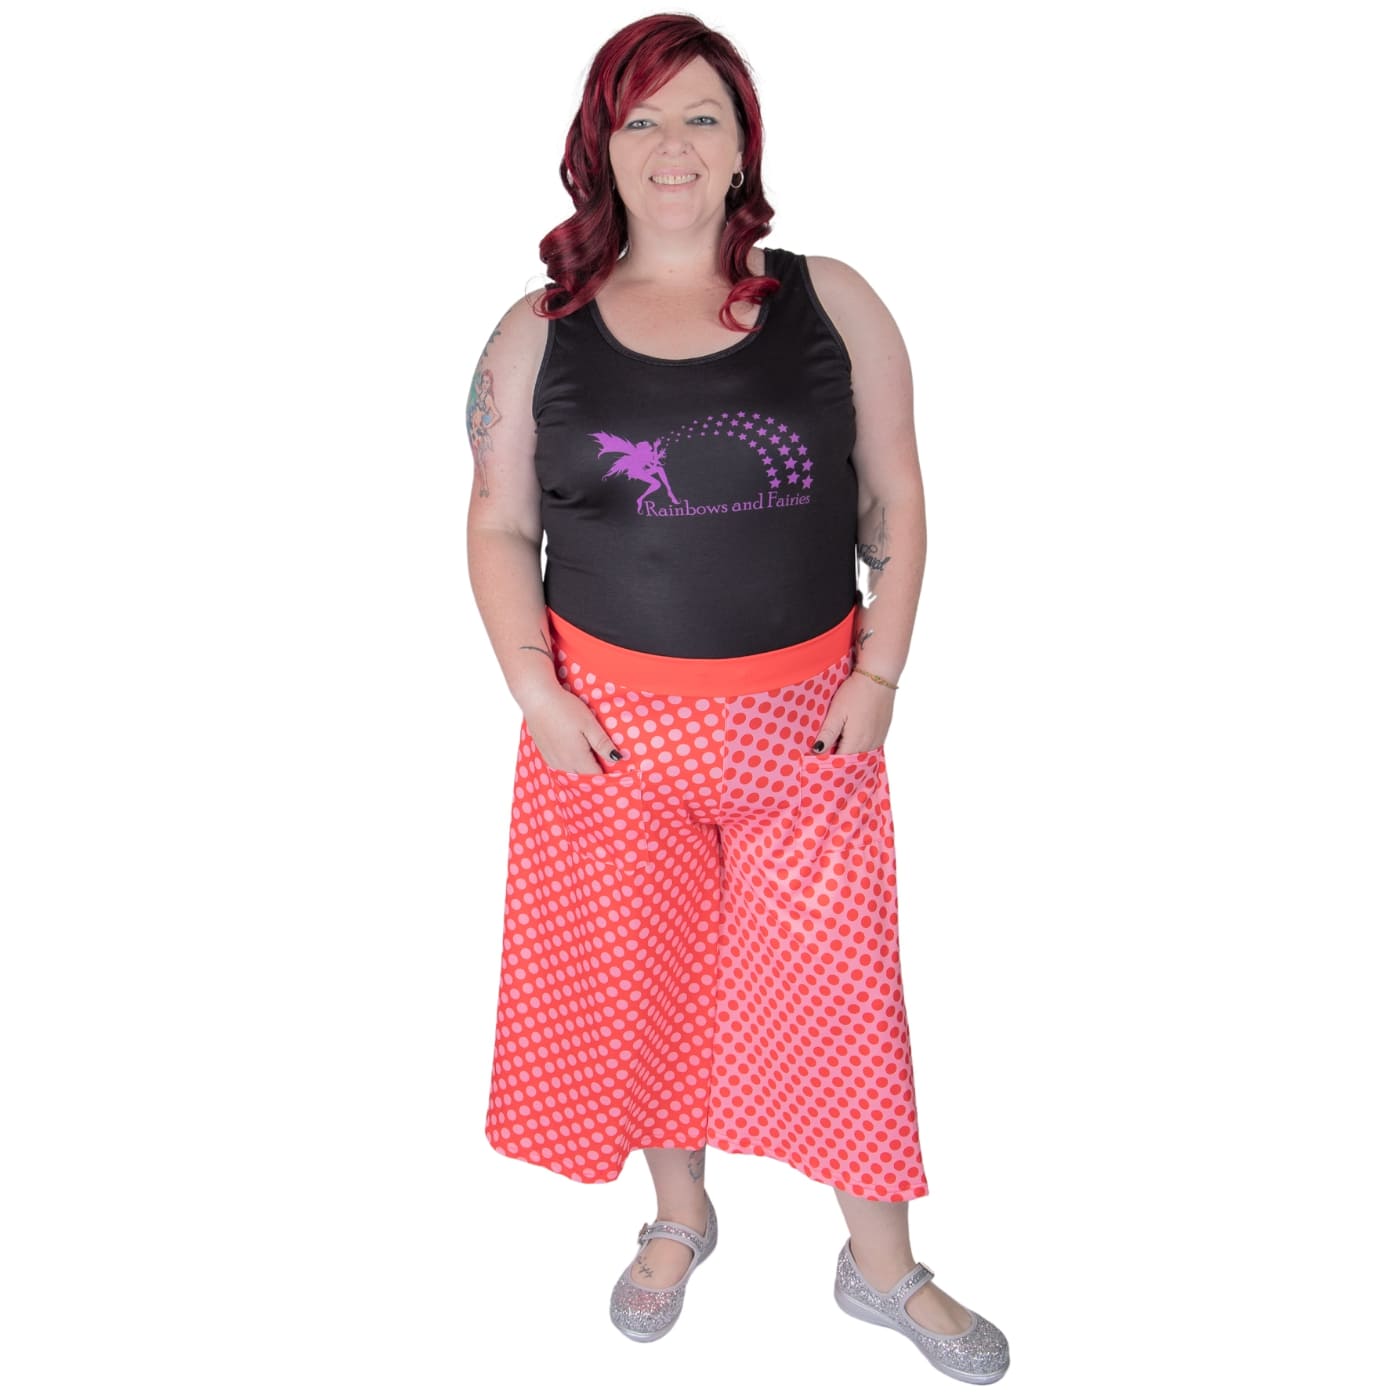 Blush Culottes by RainbowsAndFairies.com.au (Red Polka Dots - Pink Polka Dots - Pink & Red - 3 Quarter Pants - Wide Leg Pants - Vintage Inspired) - SKU: CL_CULTS_BLUSH_ORG - Pic-02